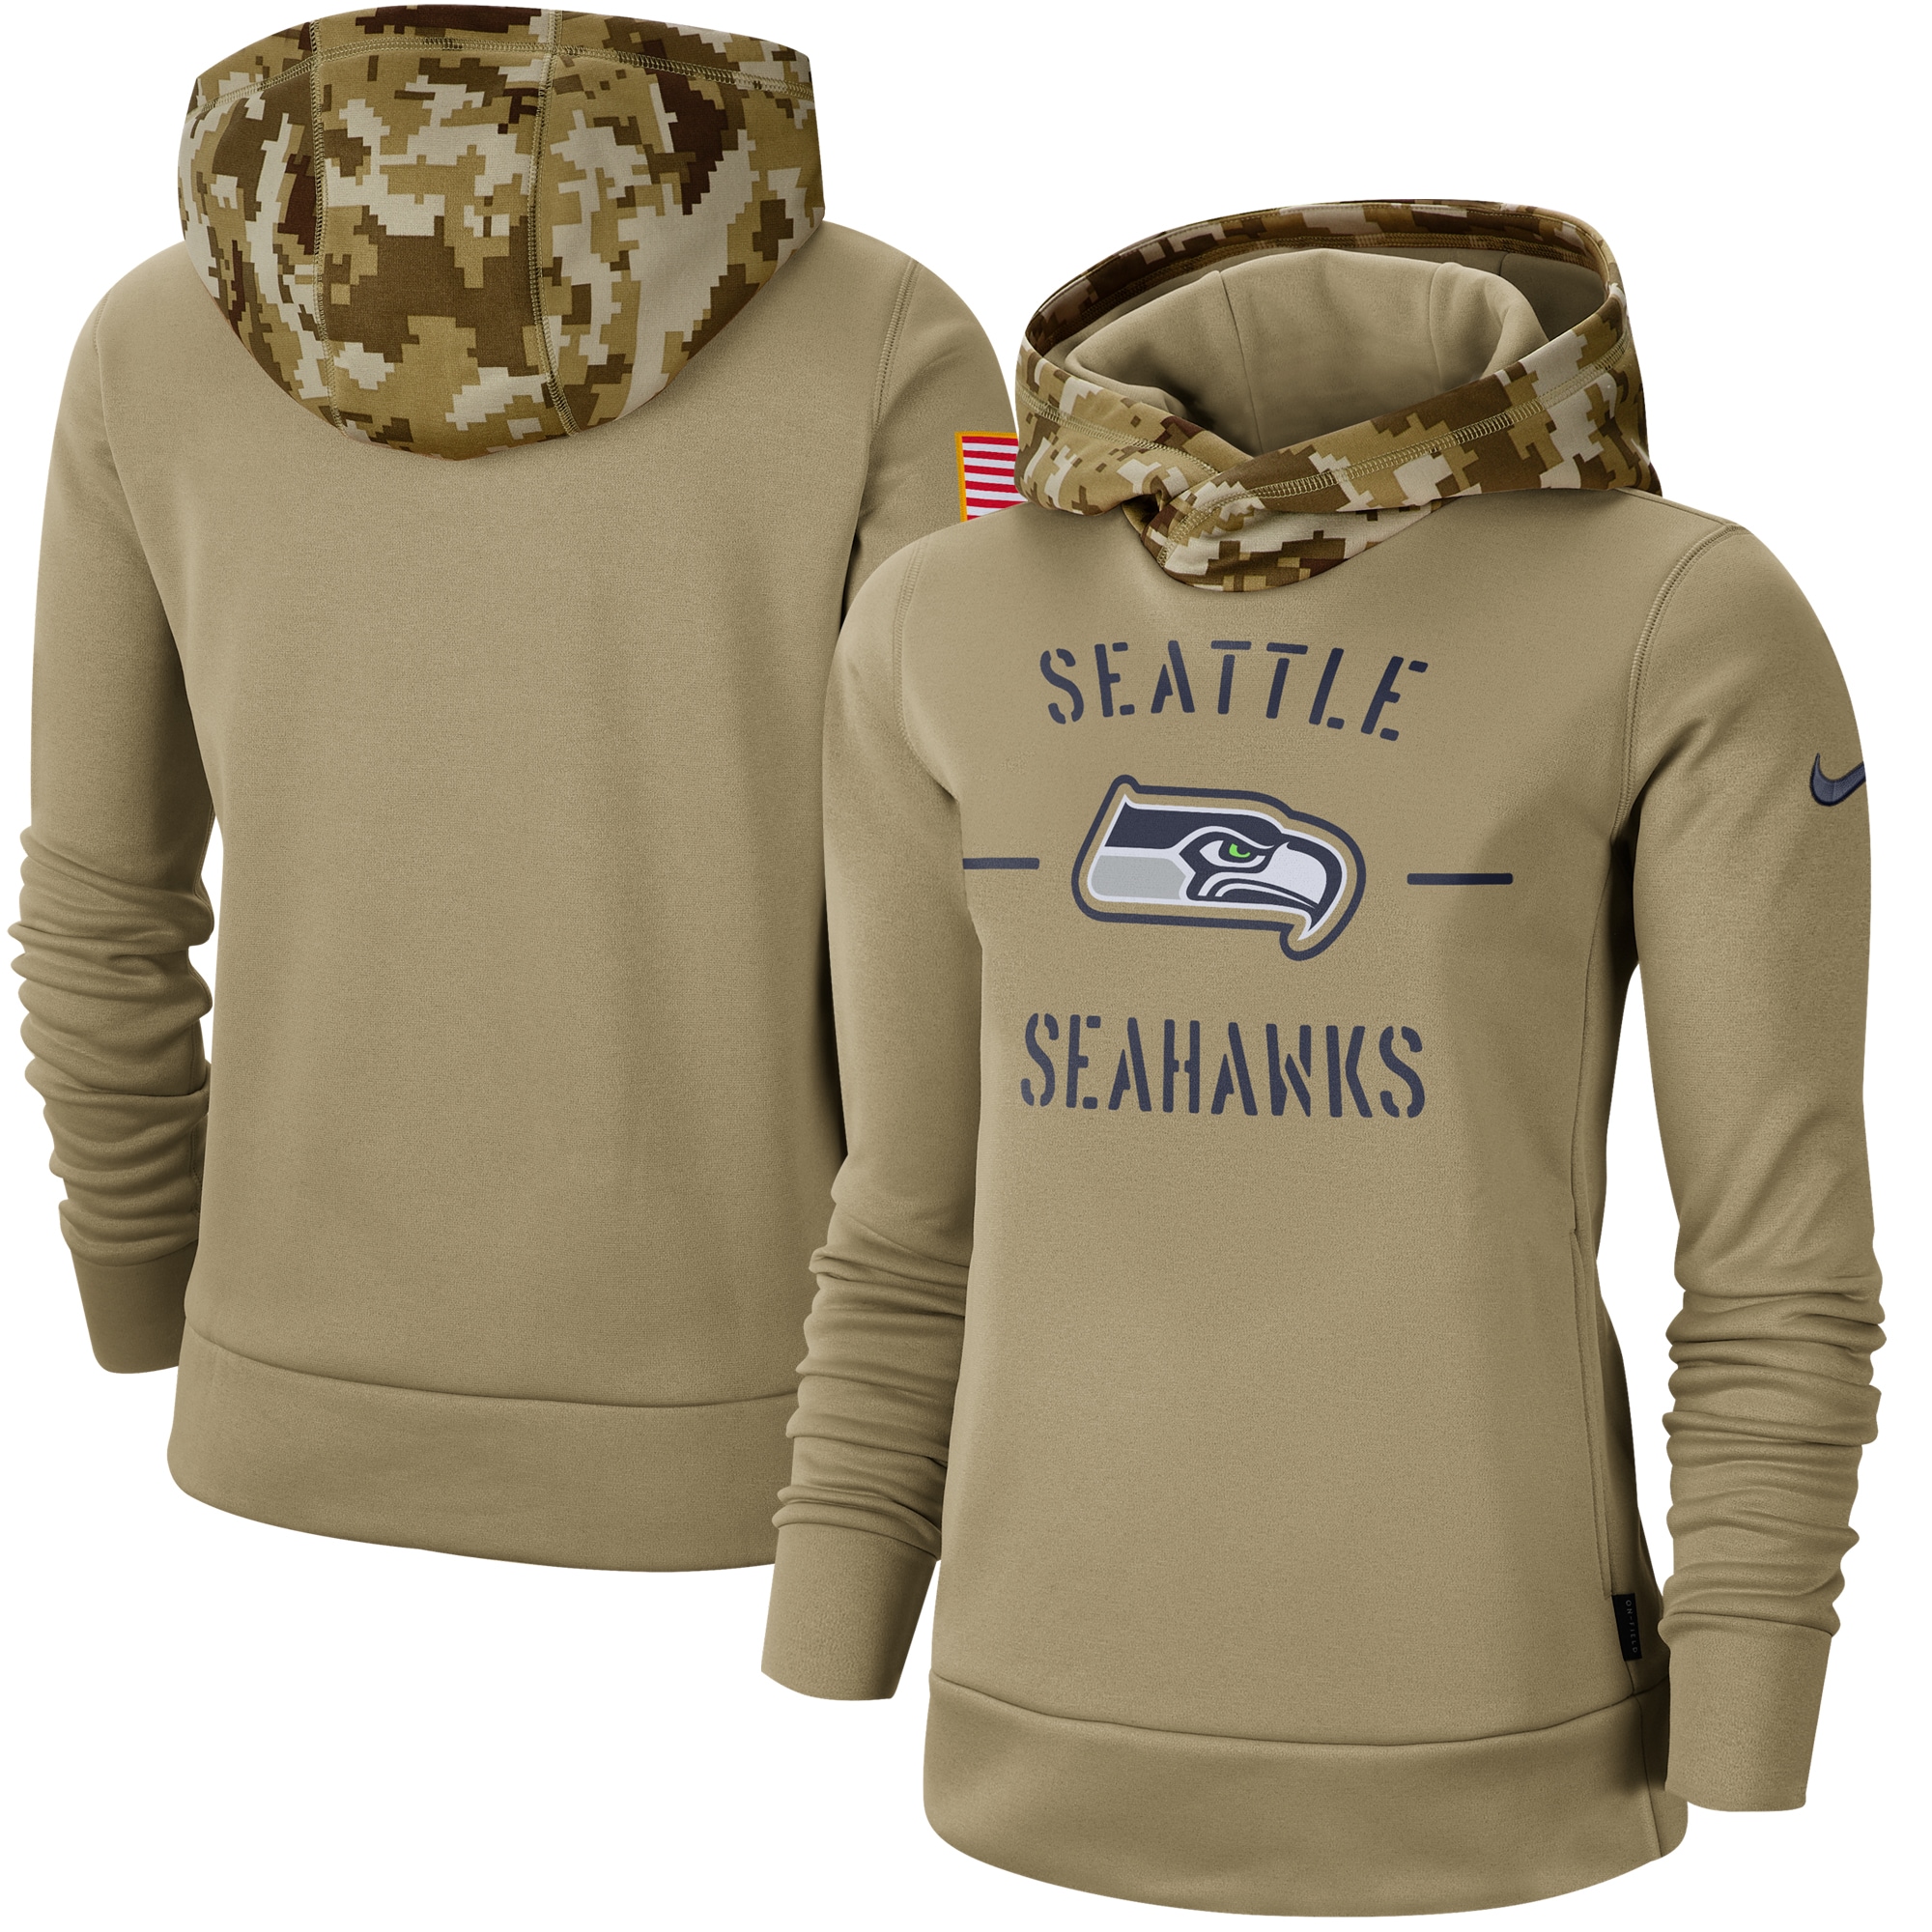 nike womens seahawks sweatshirt